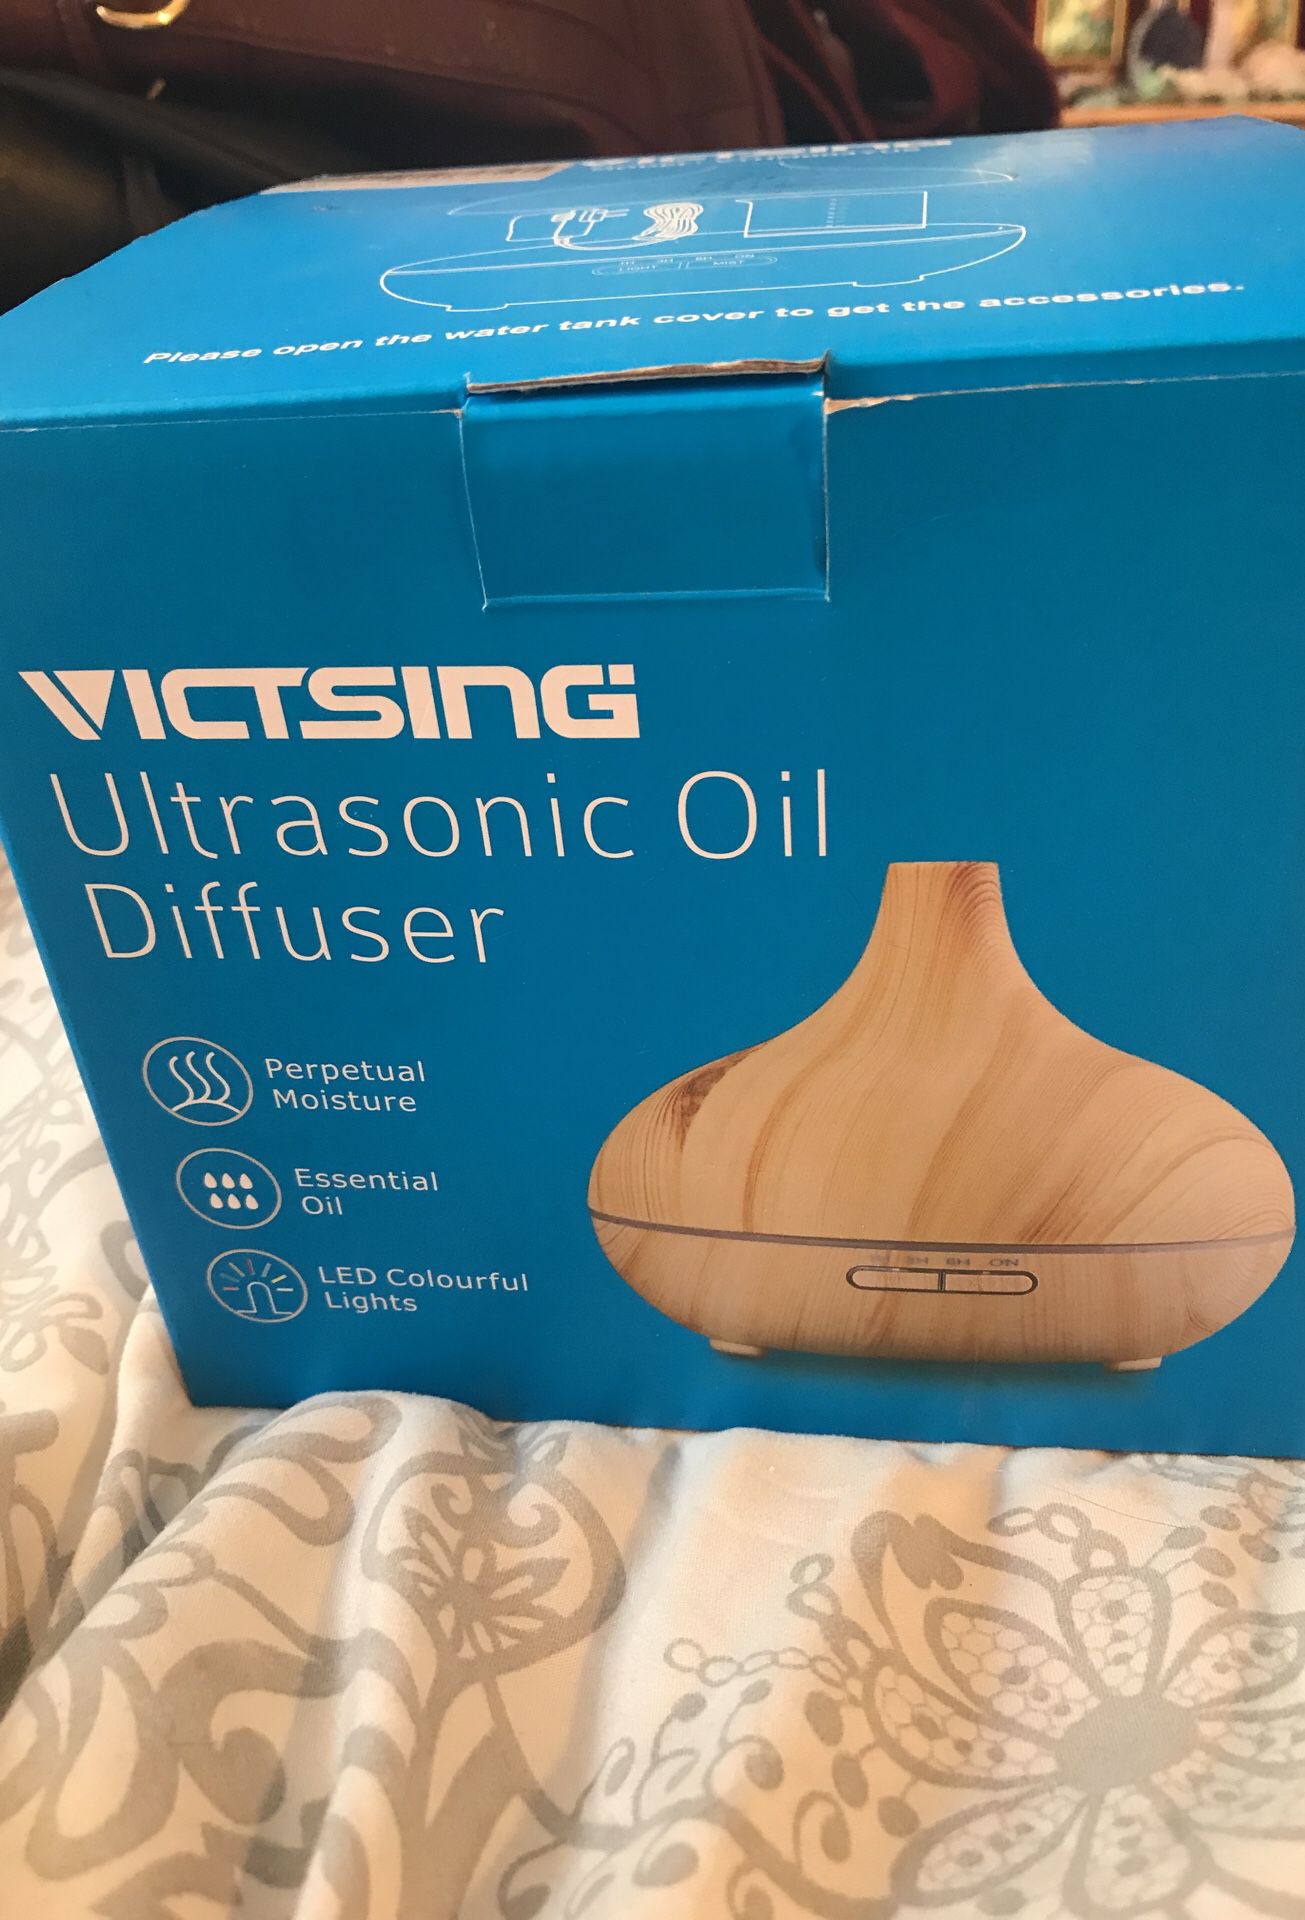 Ultrasonic Oil Diffuser